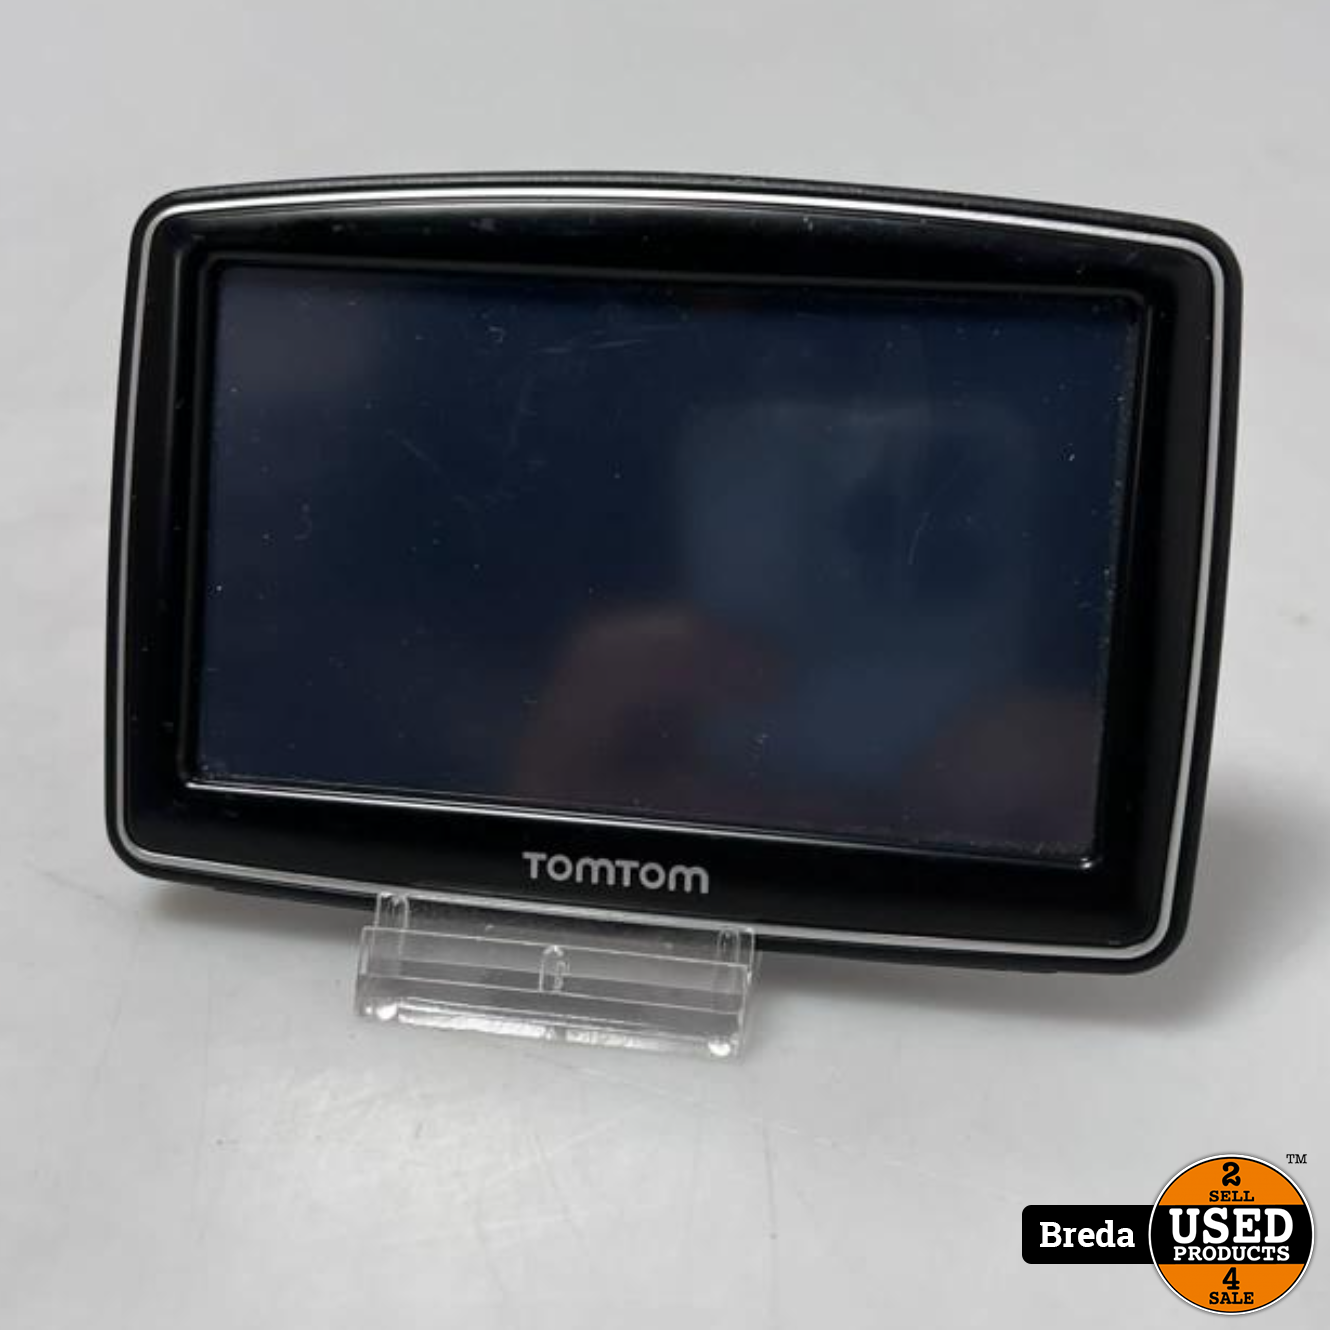 lamp Morse code herhaling Tomtom XL IQ Routes N14644 2GB | Met garantie - Used Products Breda